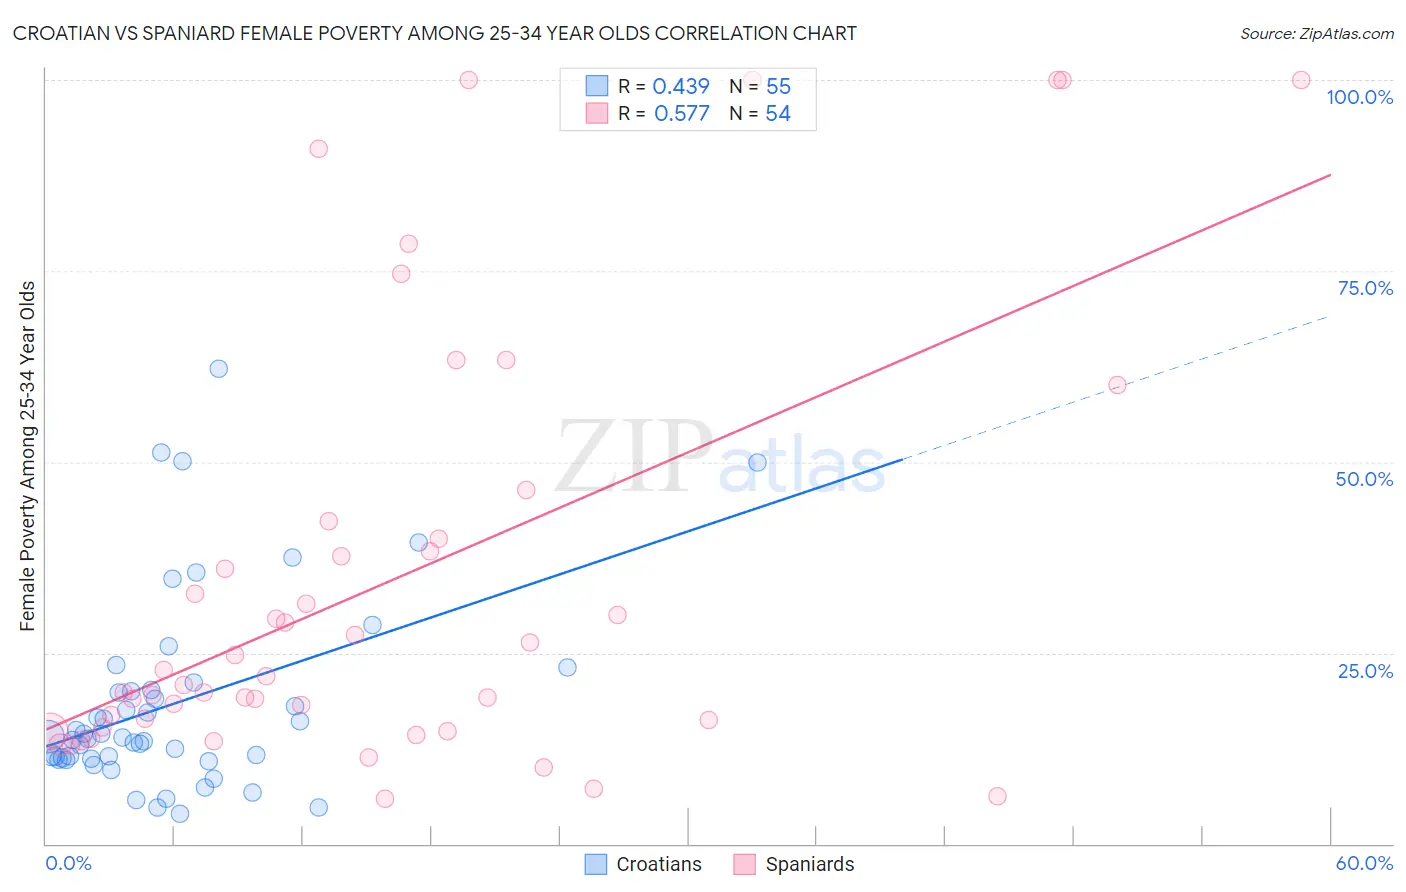 Croatian vs Spaniard Female Poverty Among 25-34 Year Olds